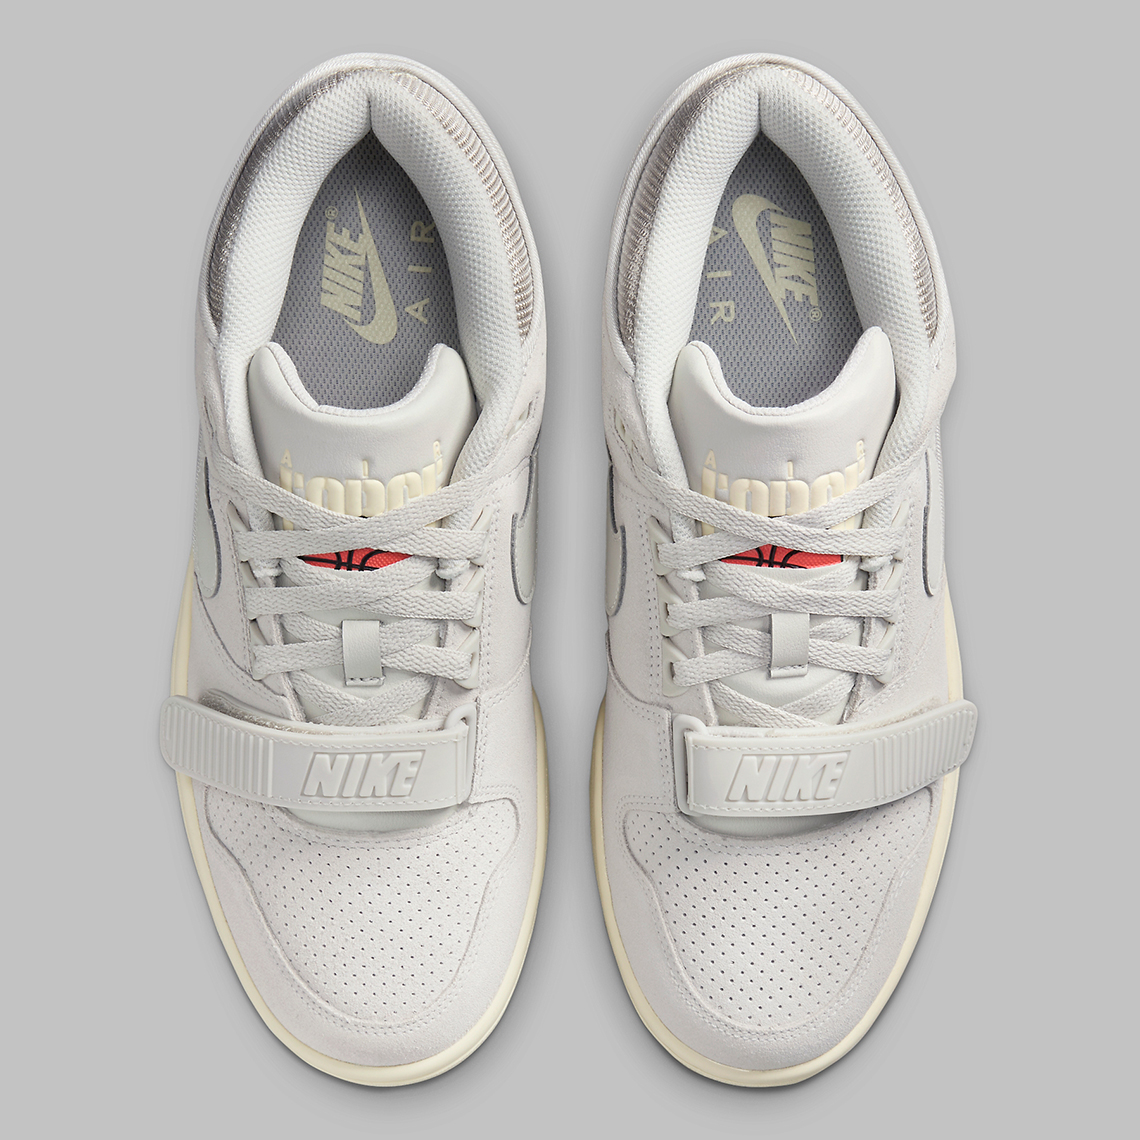 Nike Alpha Force 88 Grey Fn6594 001 5